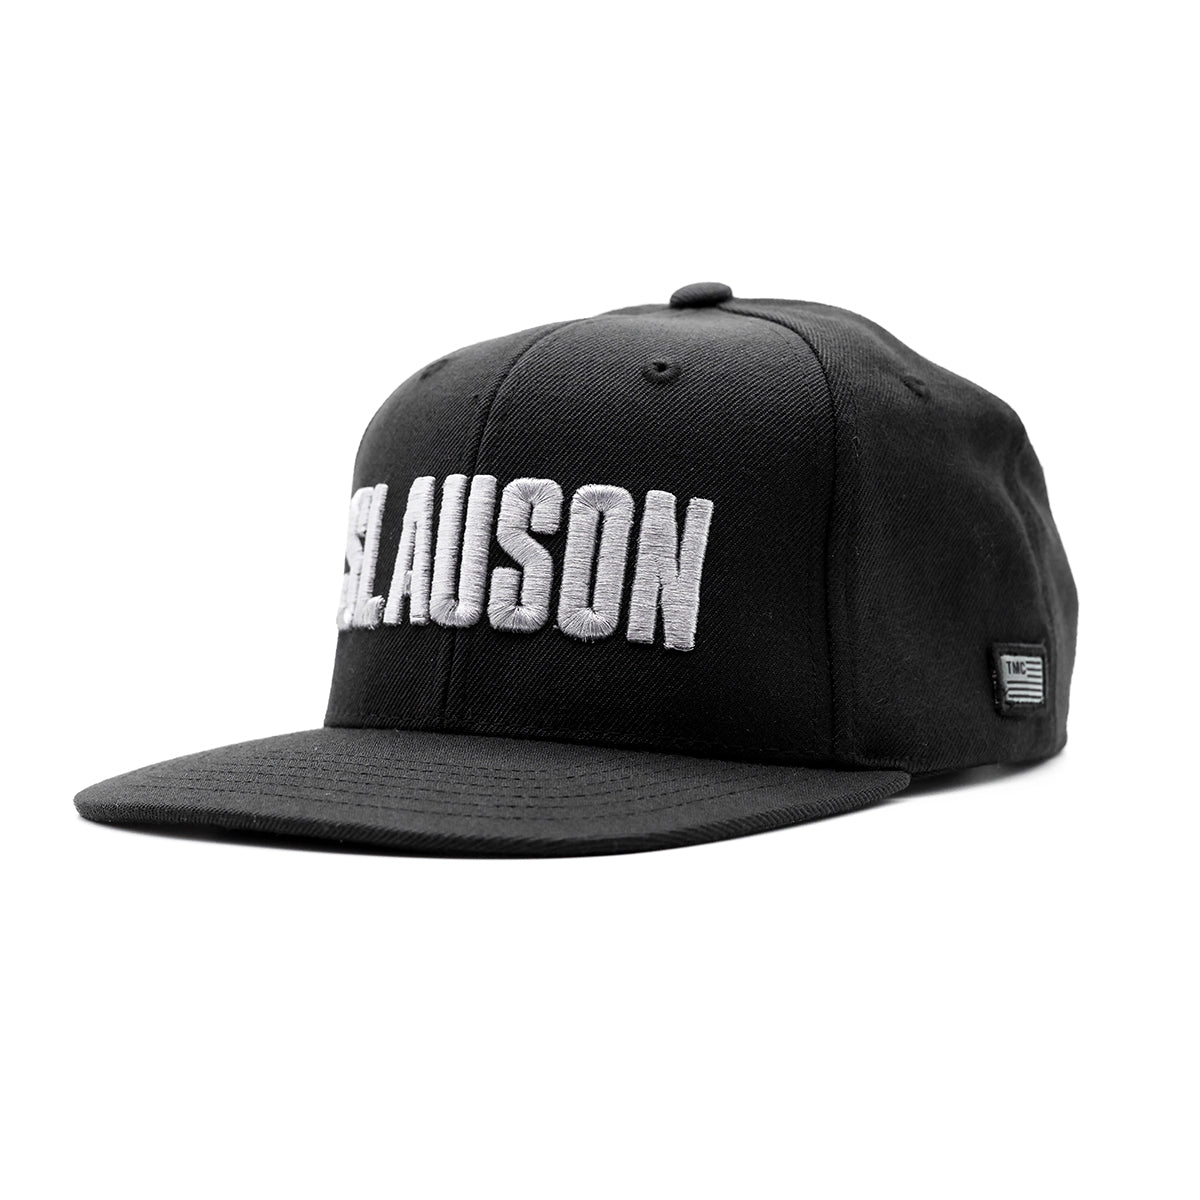 Slauson (Block Logo) Limited Edition Snapback - Black/Grey - Angle